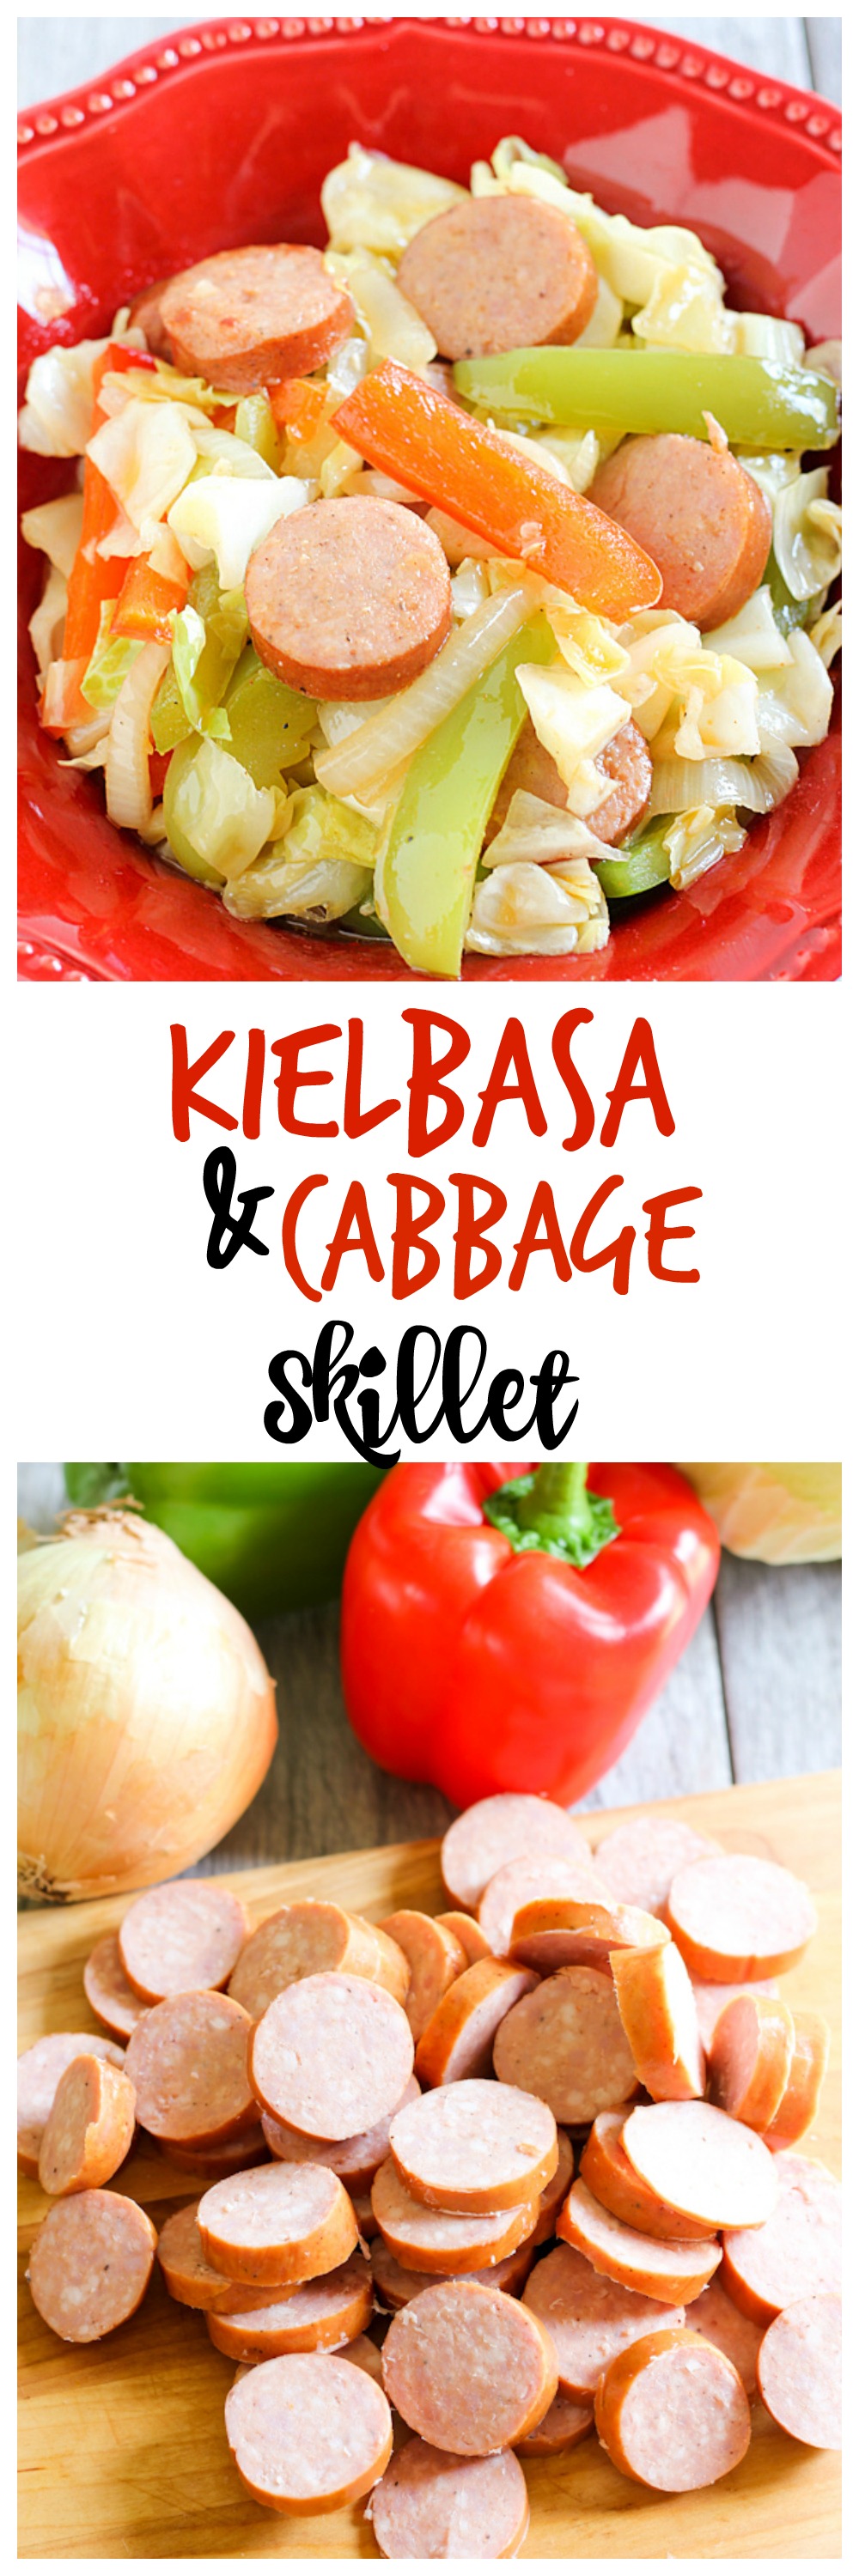 Kielbasa and Cabbage Skillet 